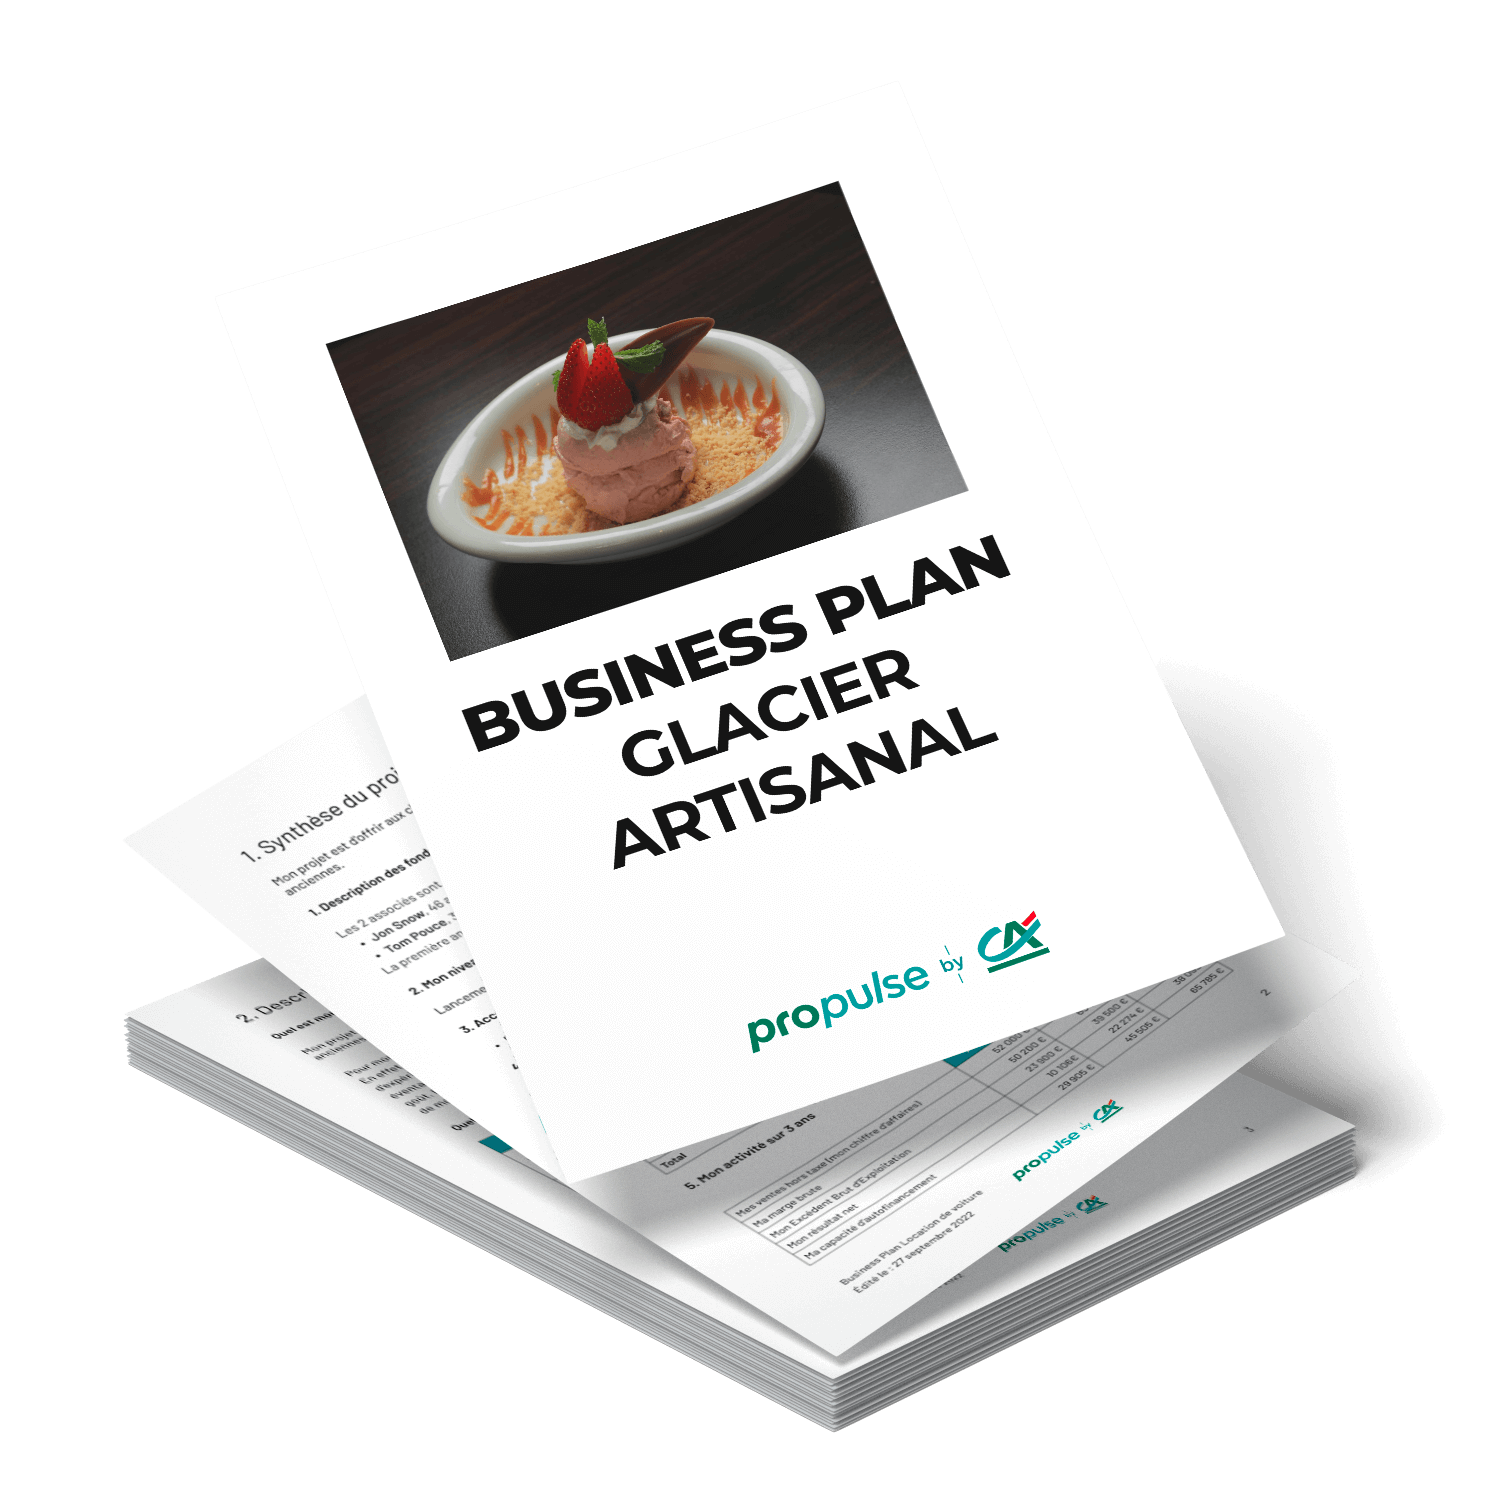 business plan glacier artisanal